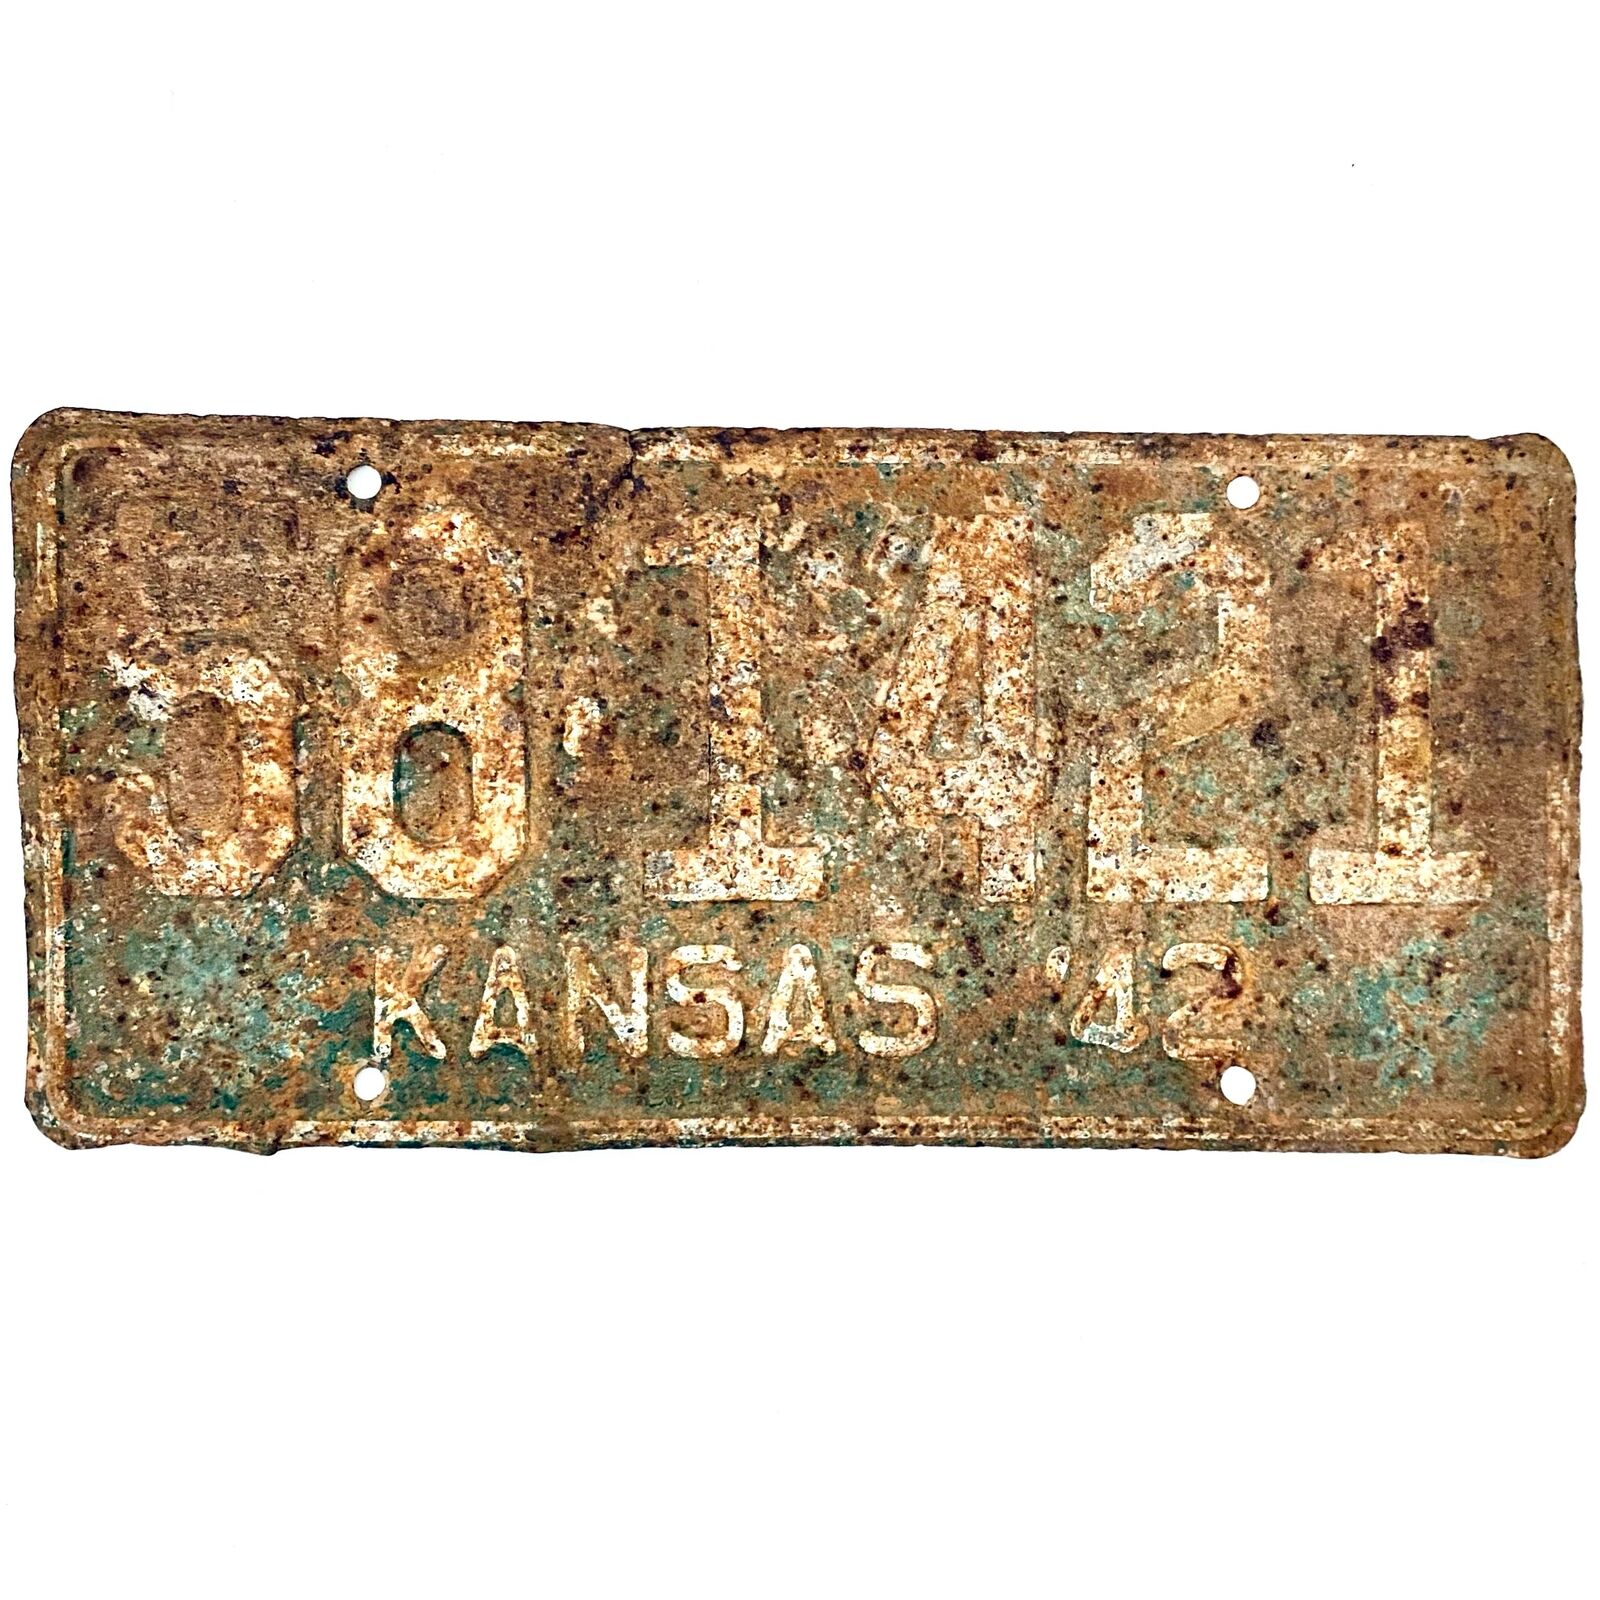 1942 United States Kansas Philips County Passenger License Plate 58-1421